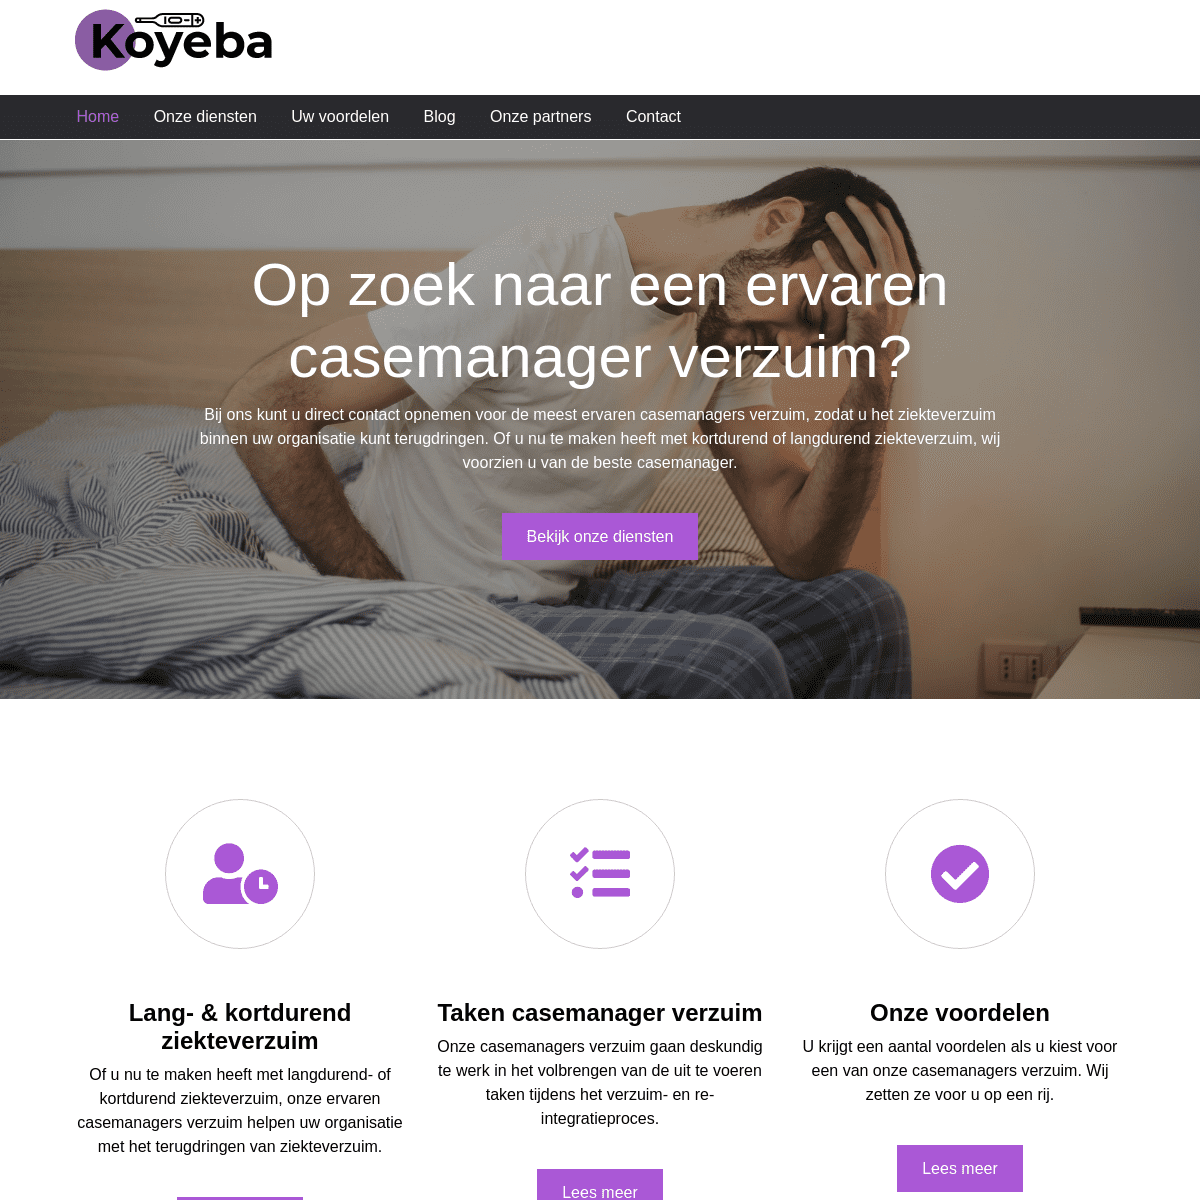 A complete backup of https://koyeba.nl